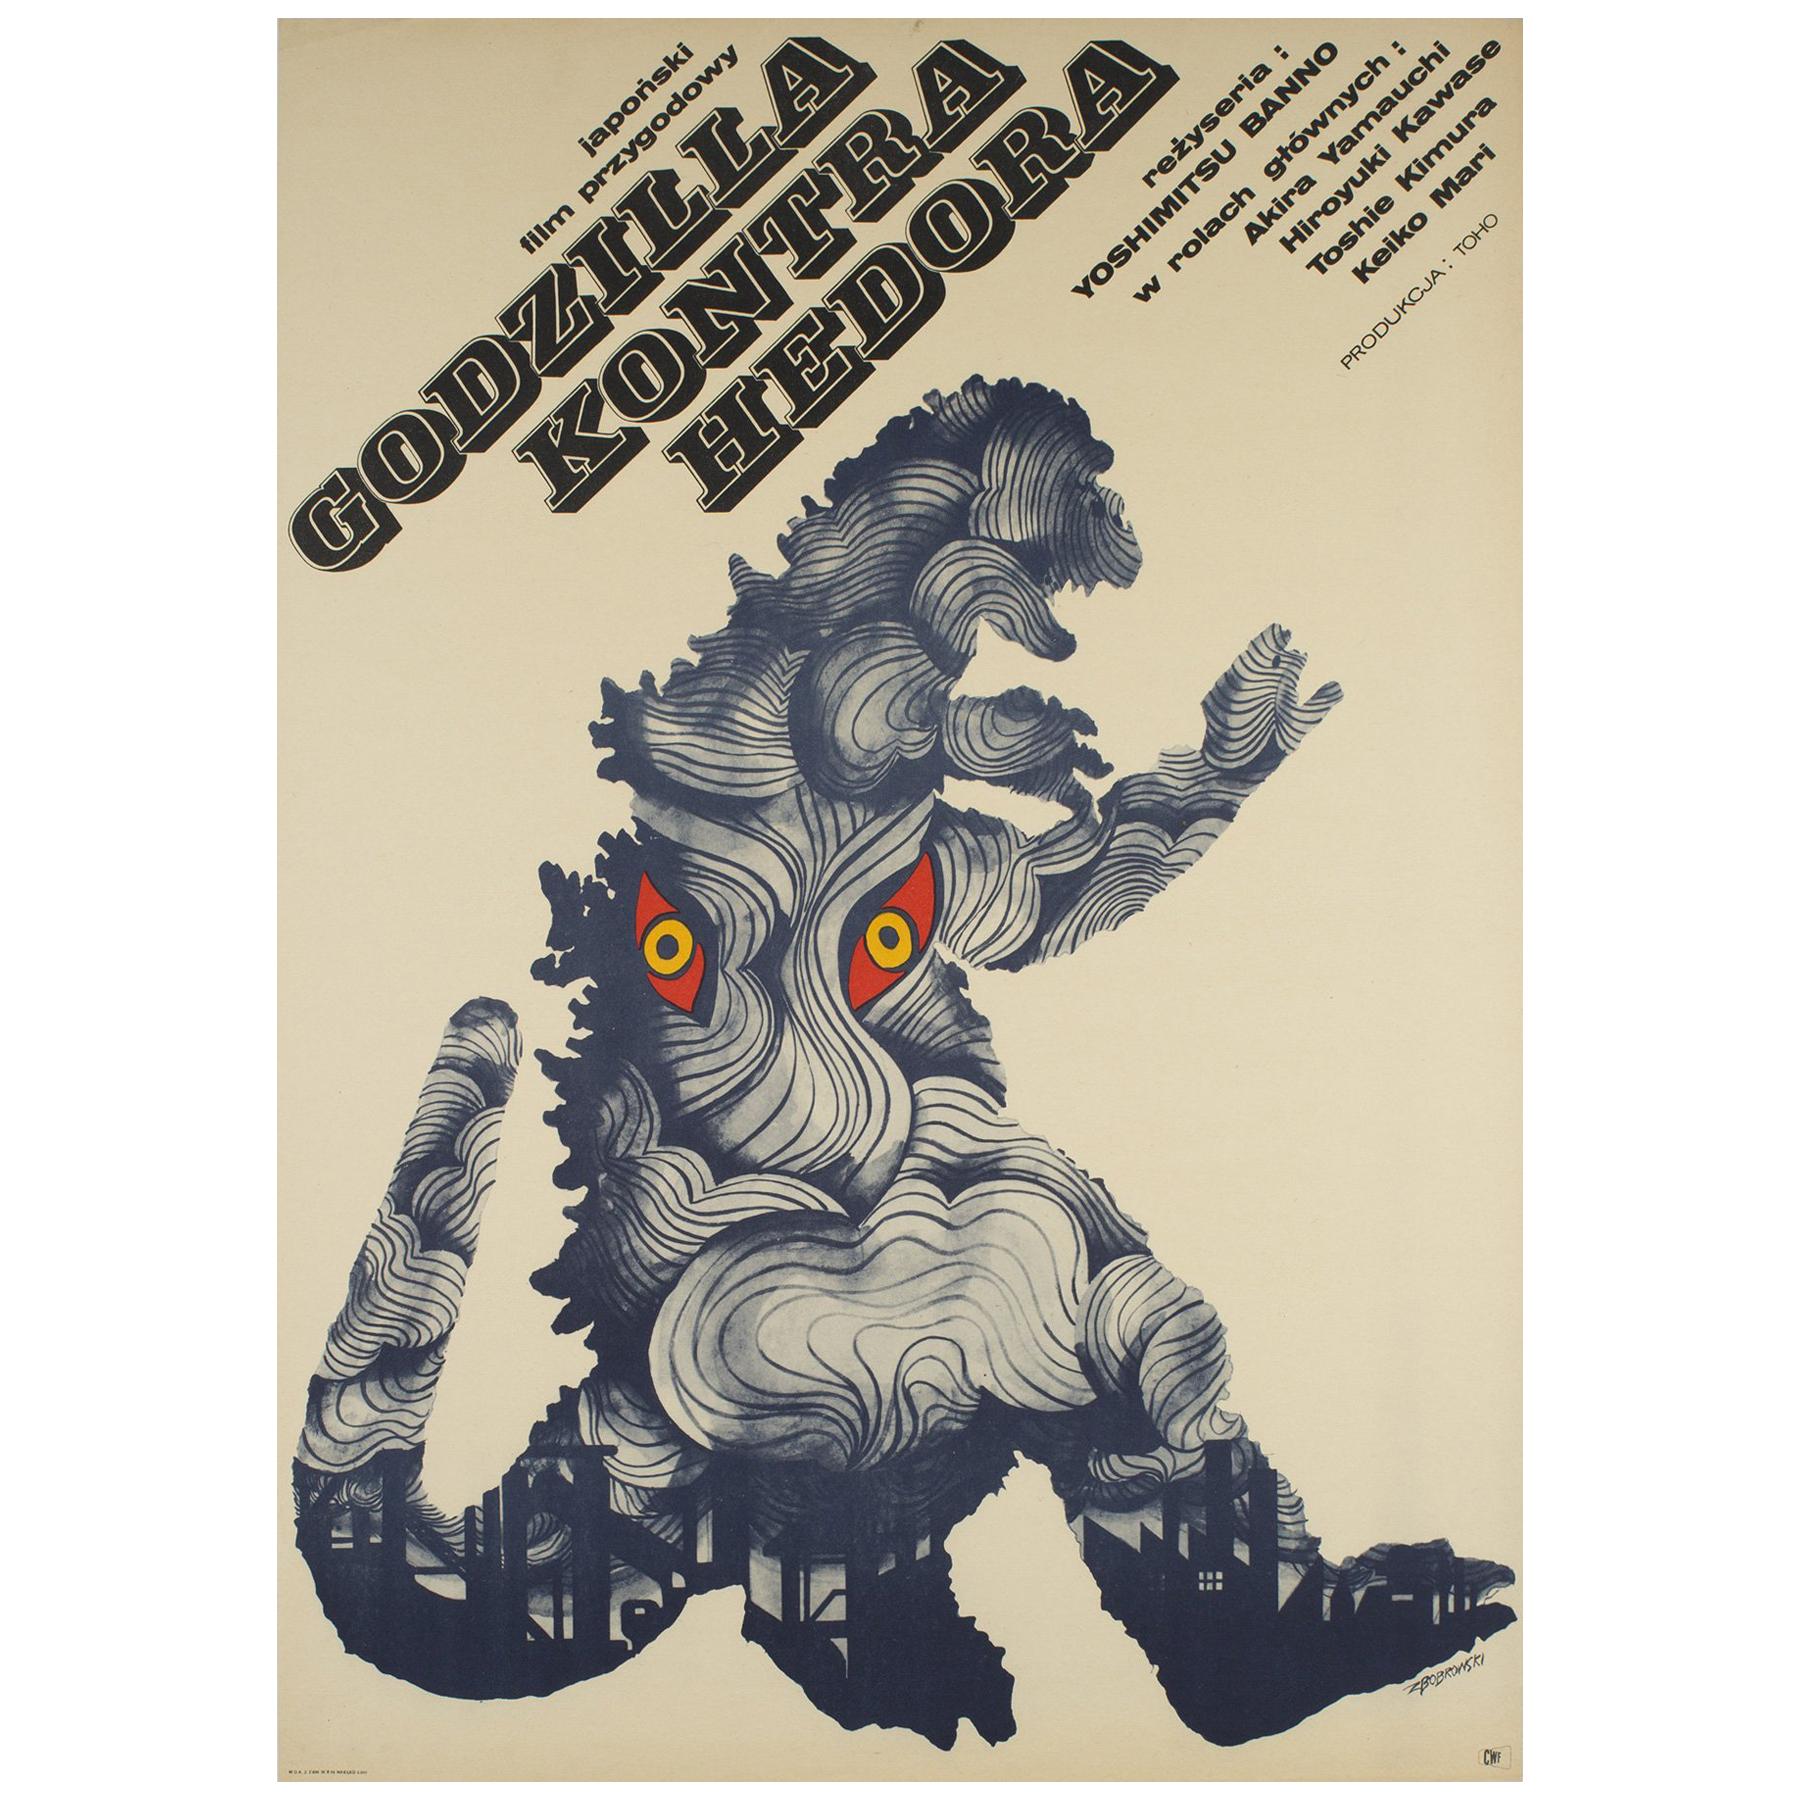 Godzilla Vs. Hedorah Polish Film Poster, Zygmunt Bobrowski, 1973